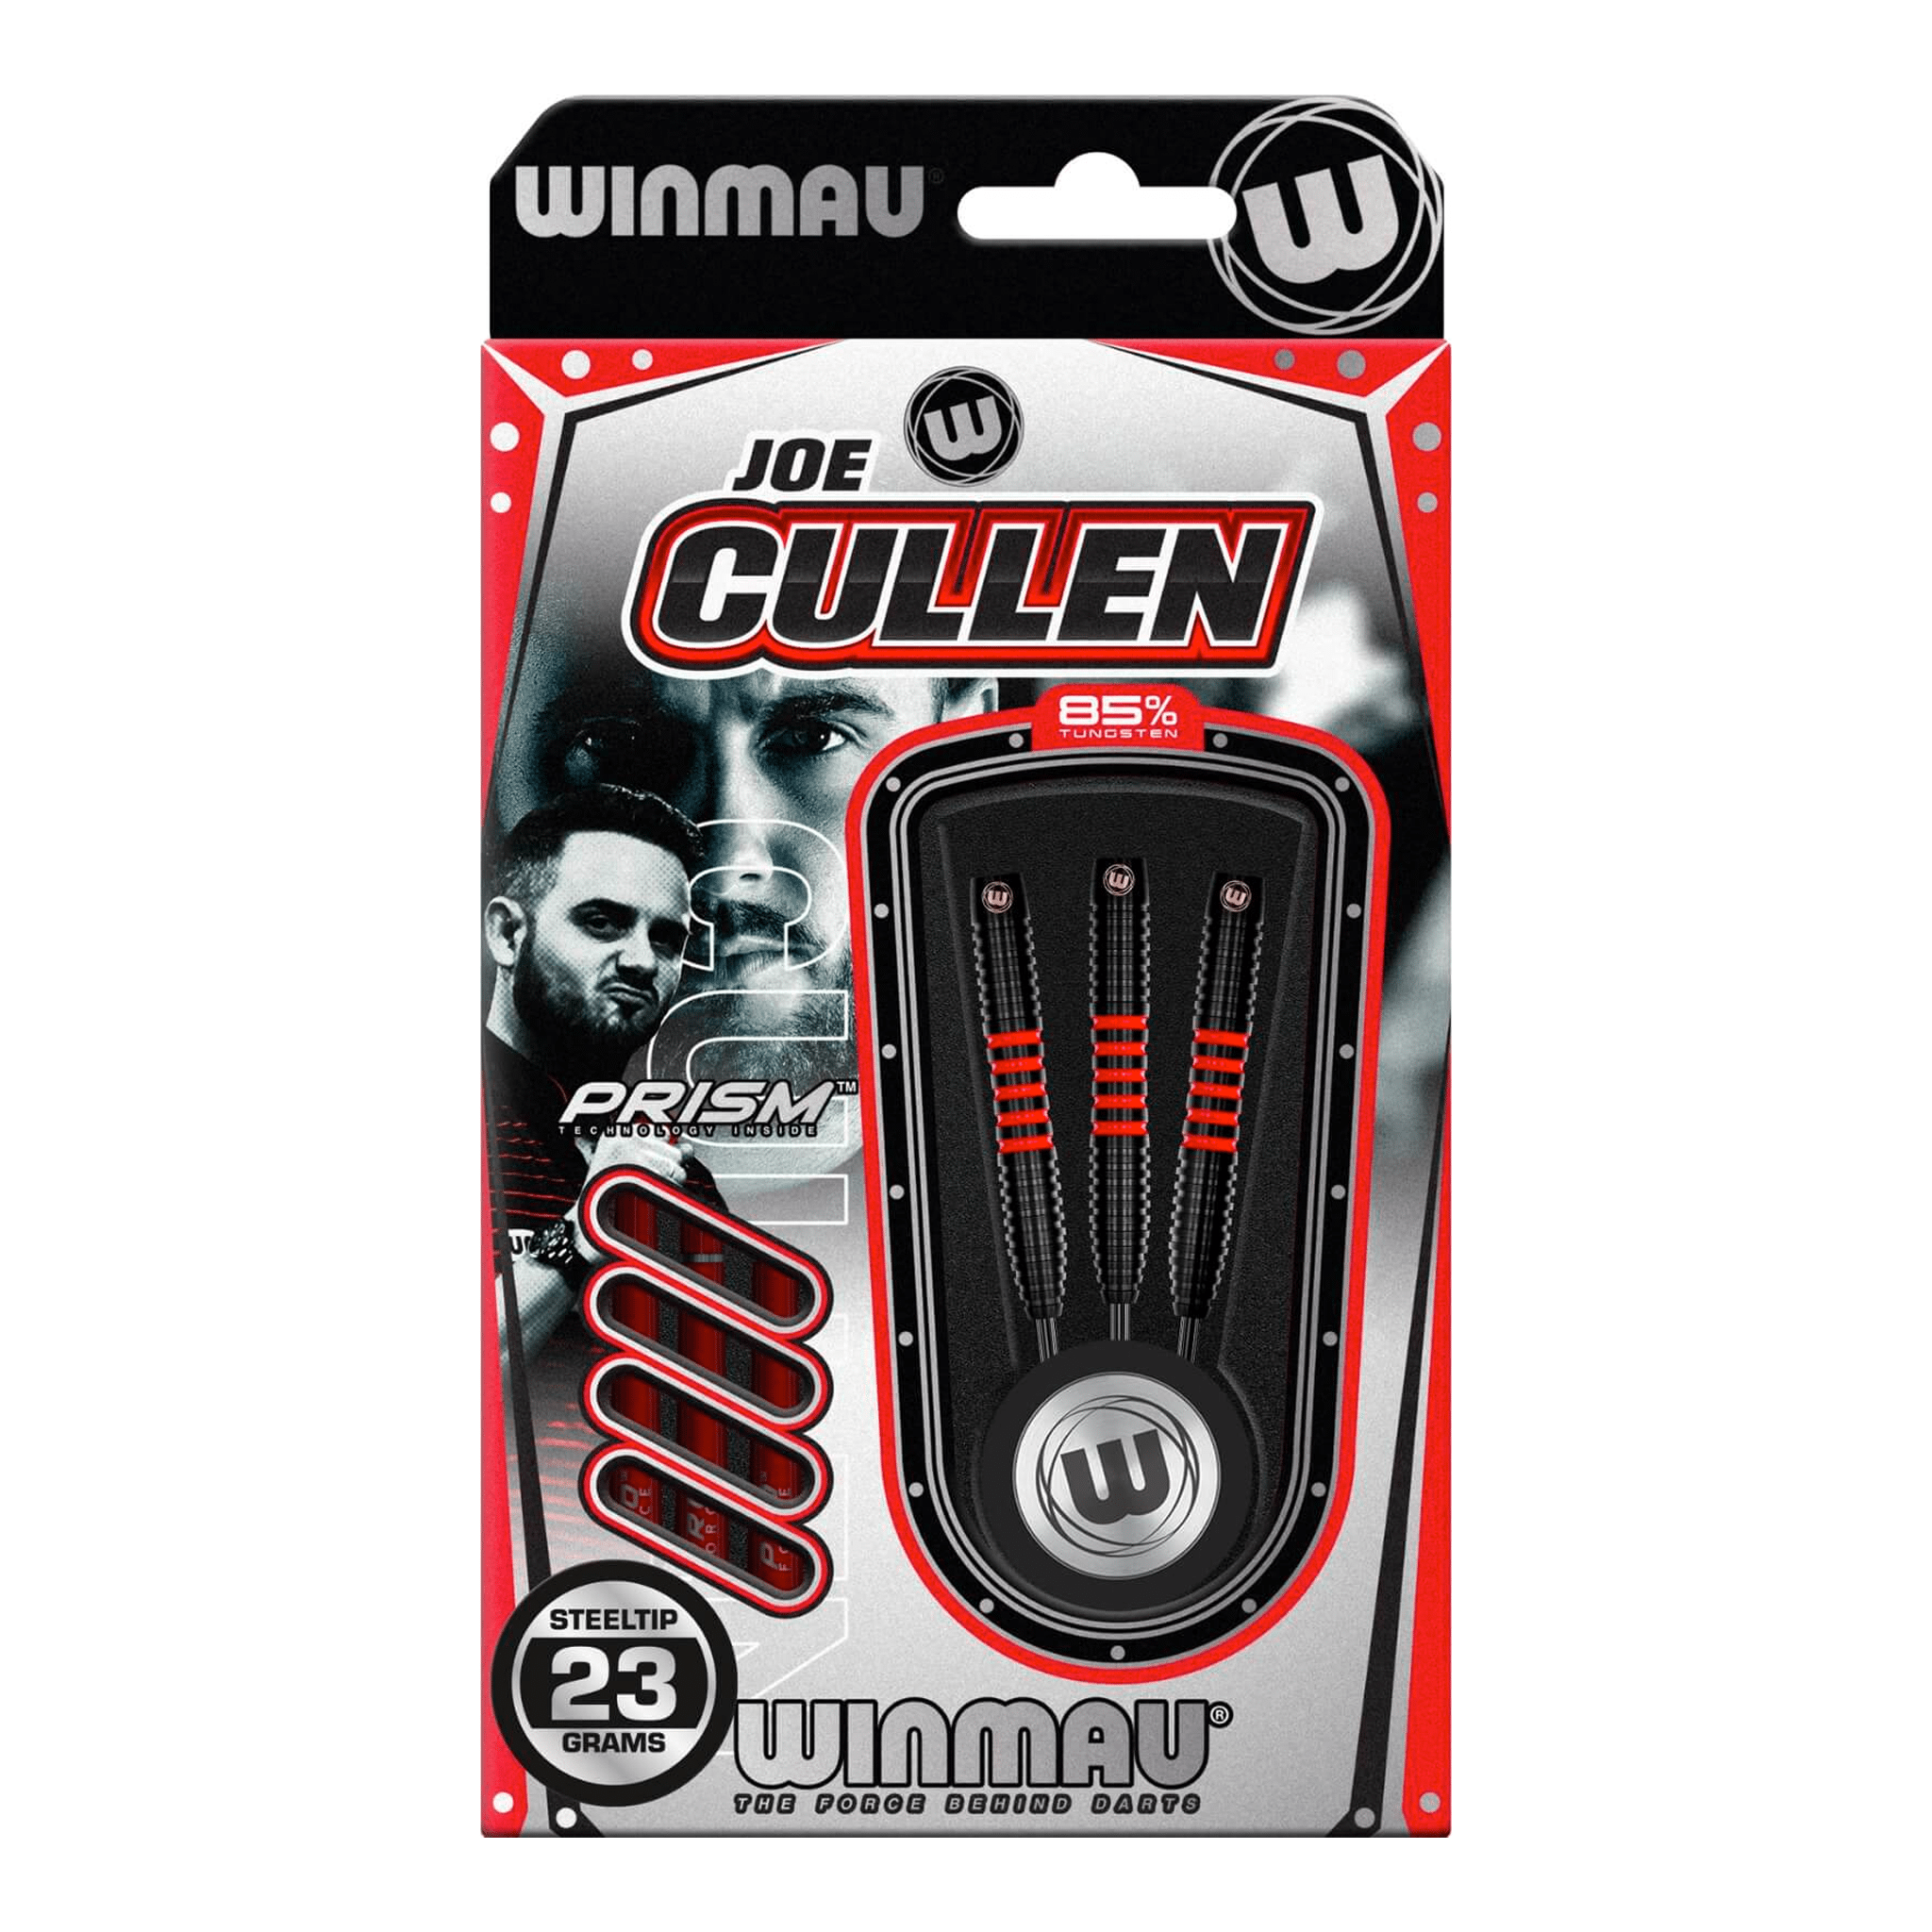 Winmau Joe Cullen Pro Series - 85% Tungsten Steel Tip Darts Darts